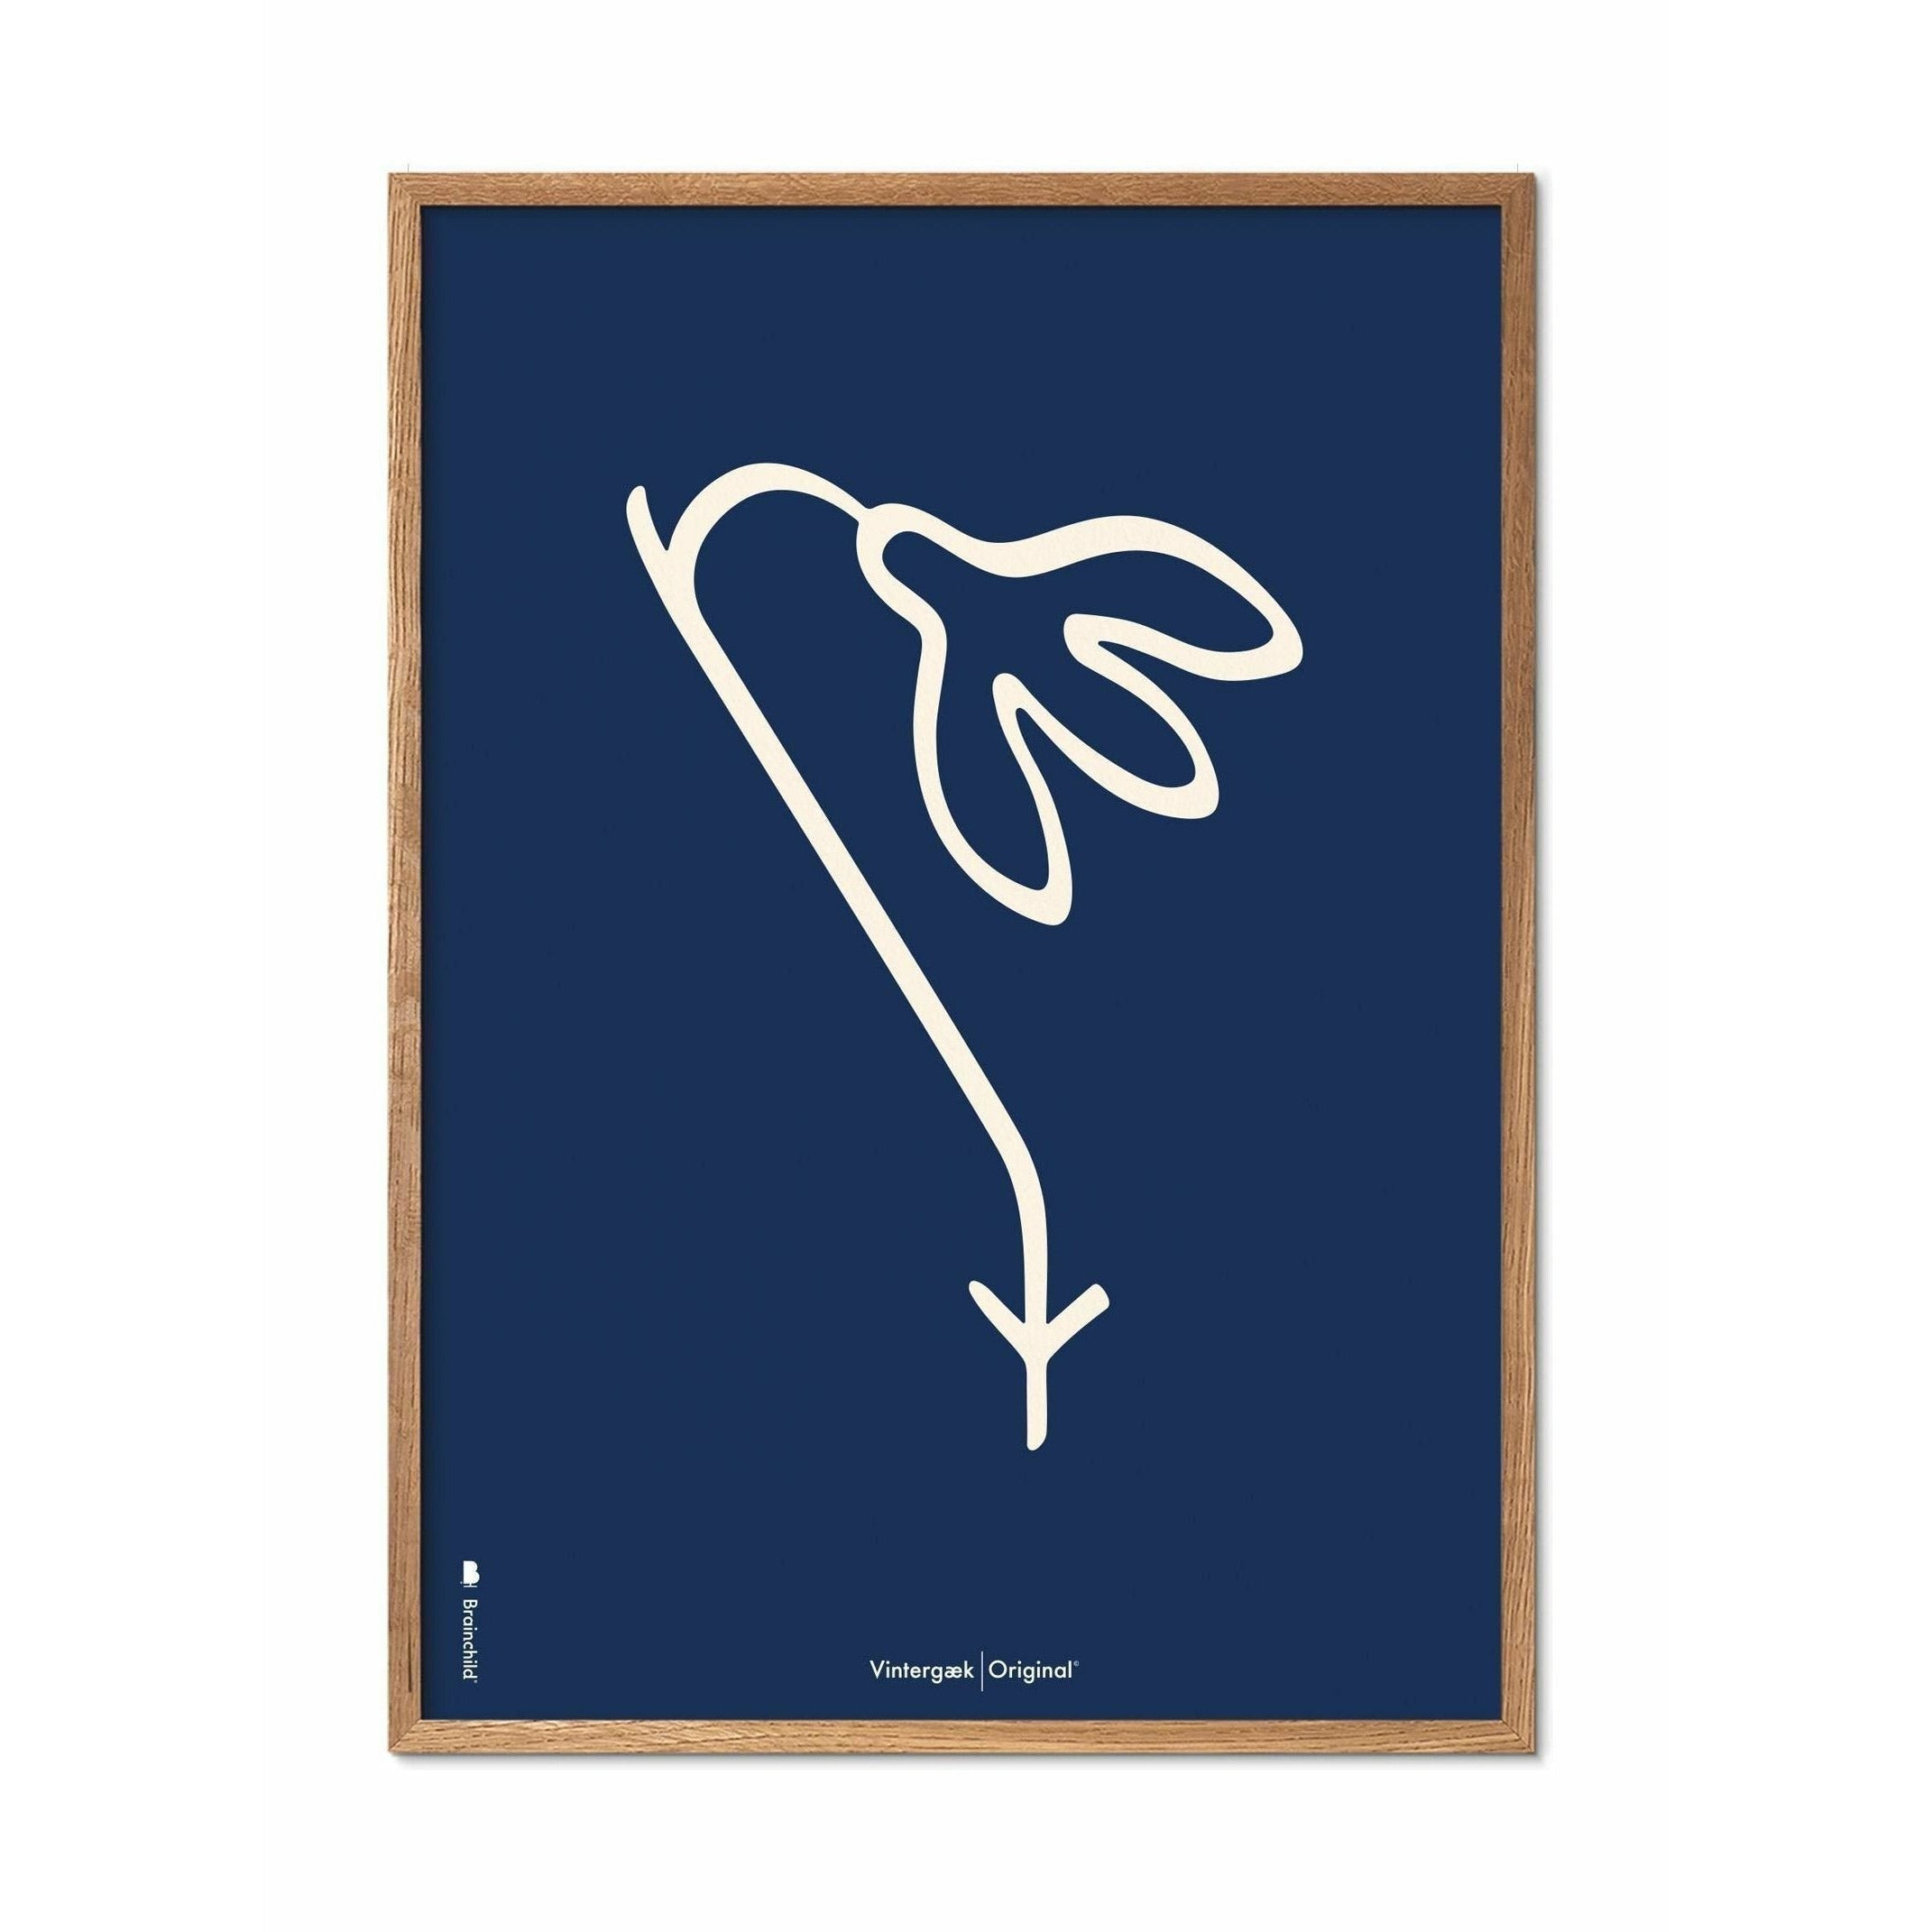 Brainchild Vintergapslinjeposter, ram i lätt trä 50x70 cm, blå bakgrund